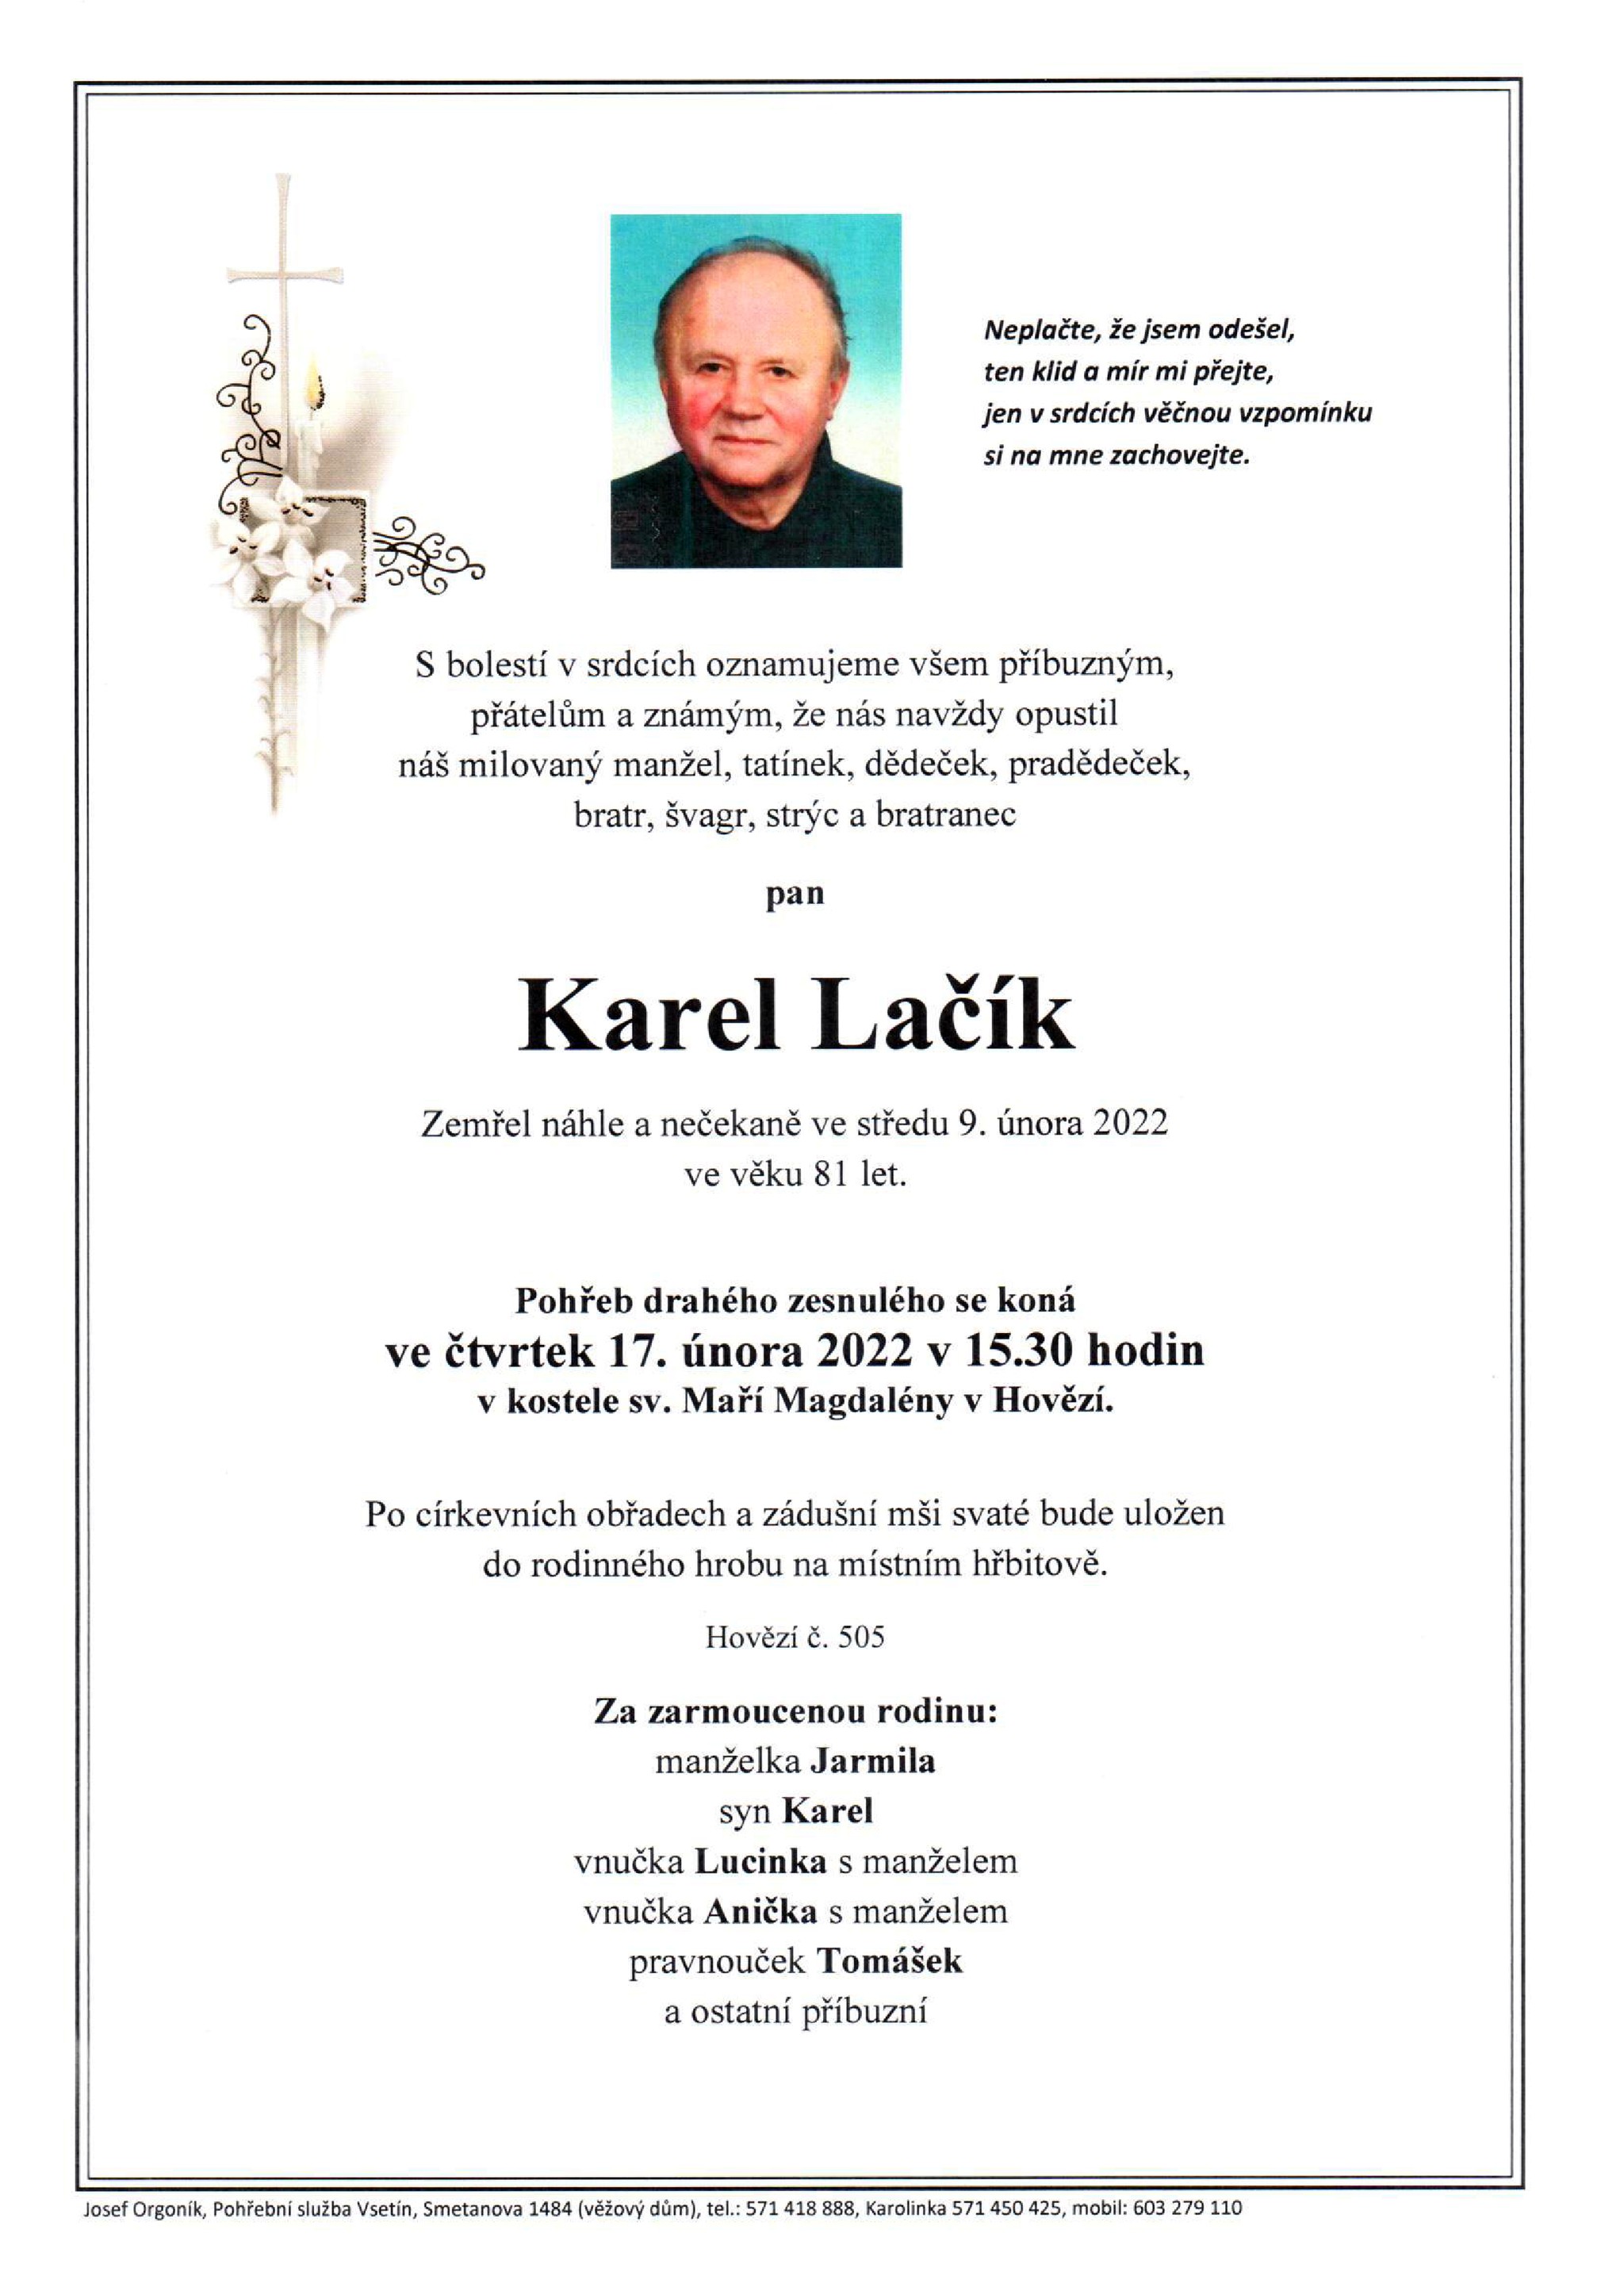 Karel Lačík